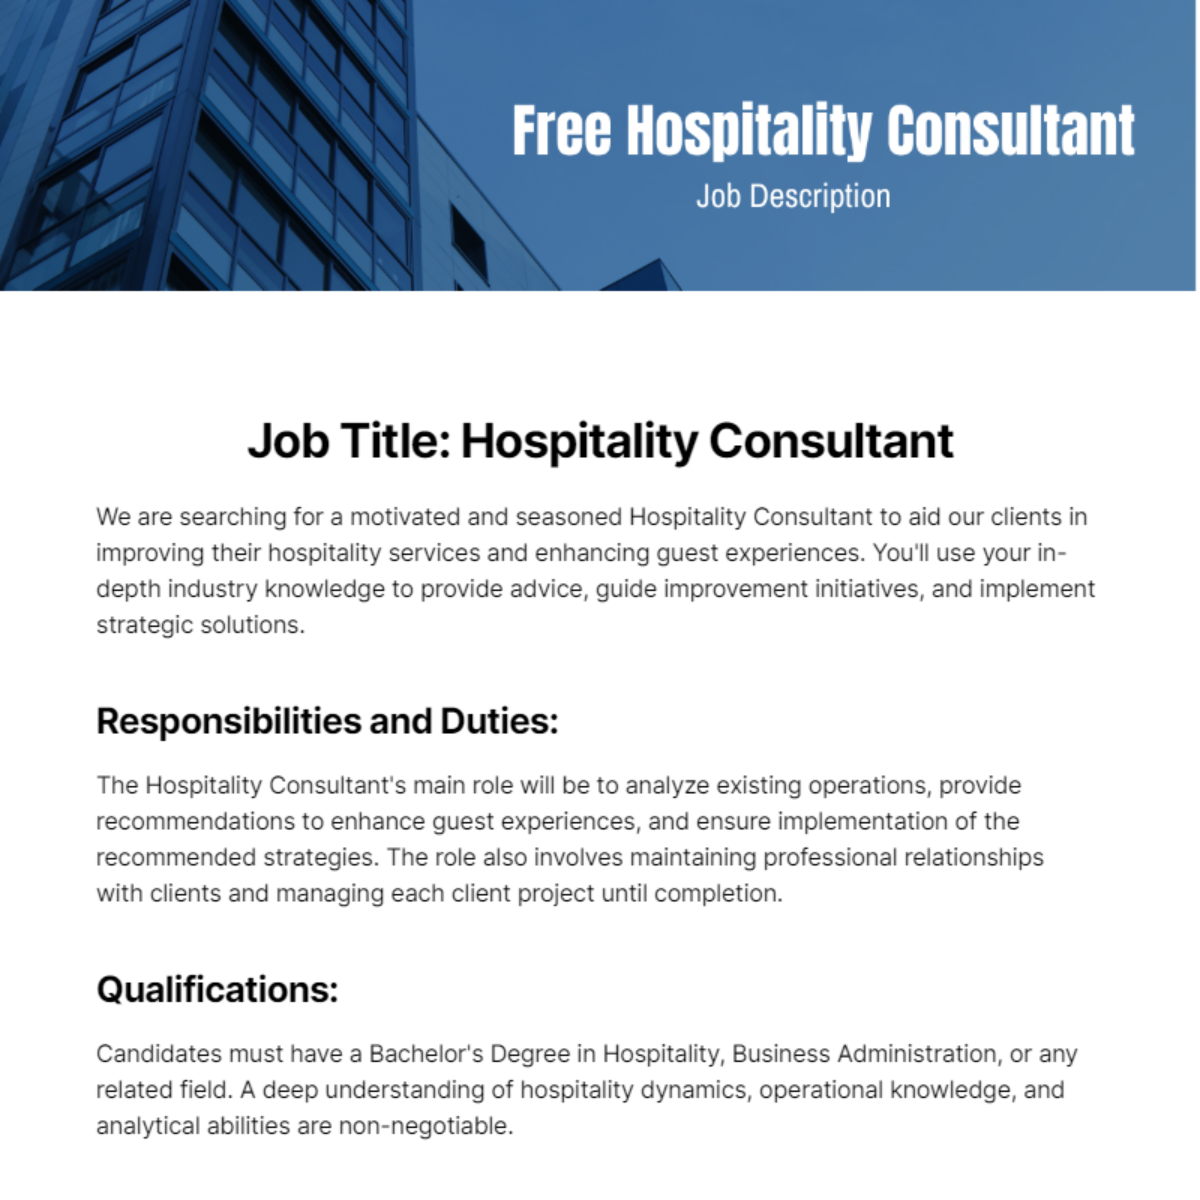 Free Hospitality Consultant Job Description Template